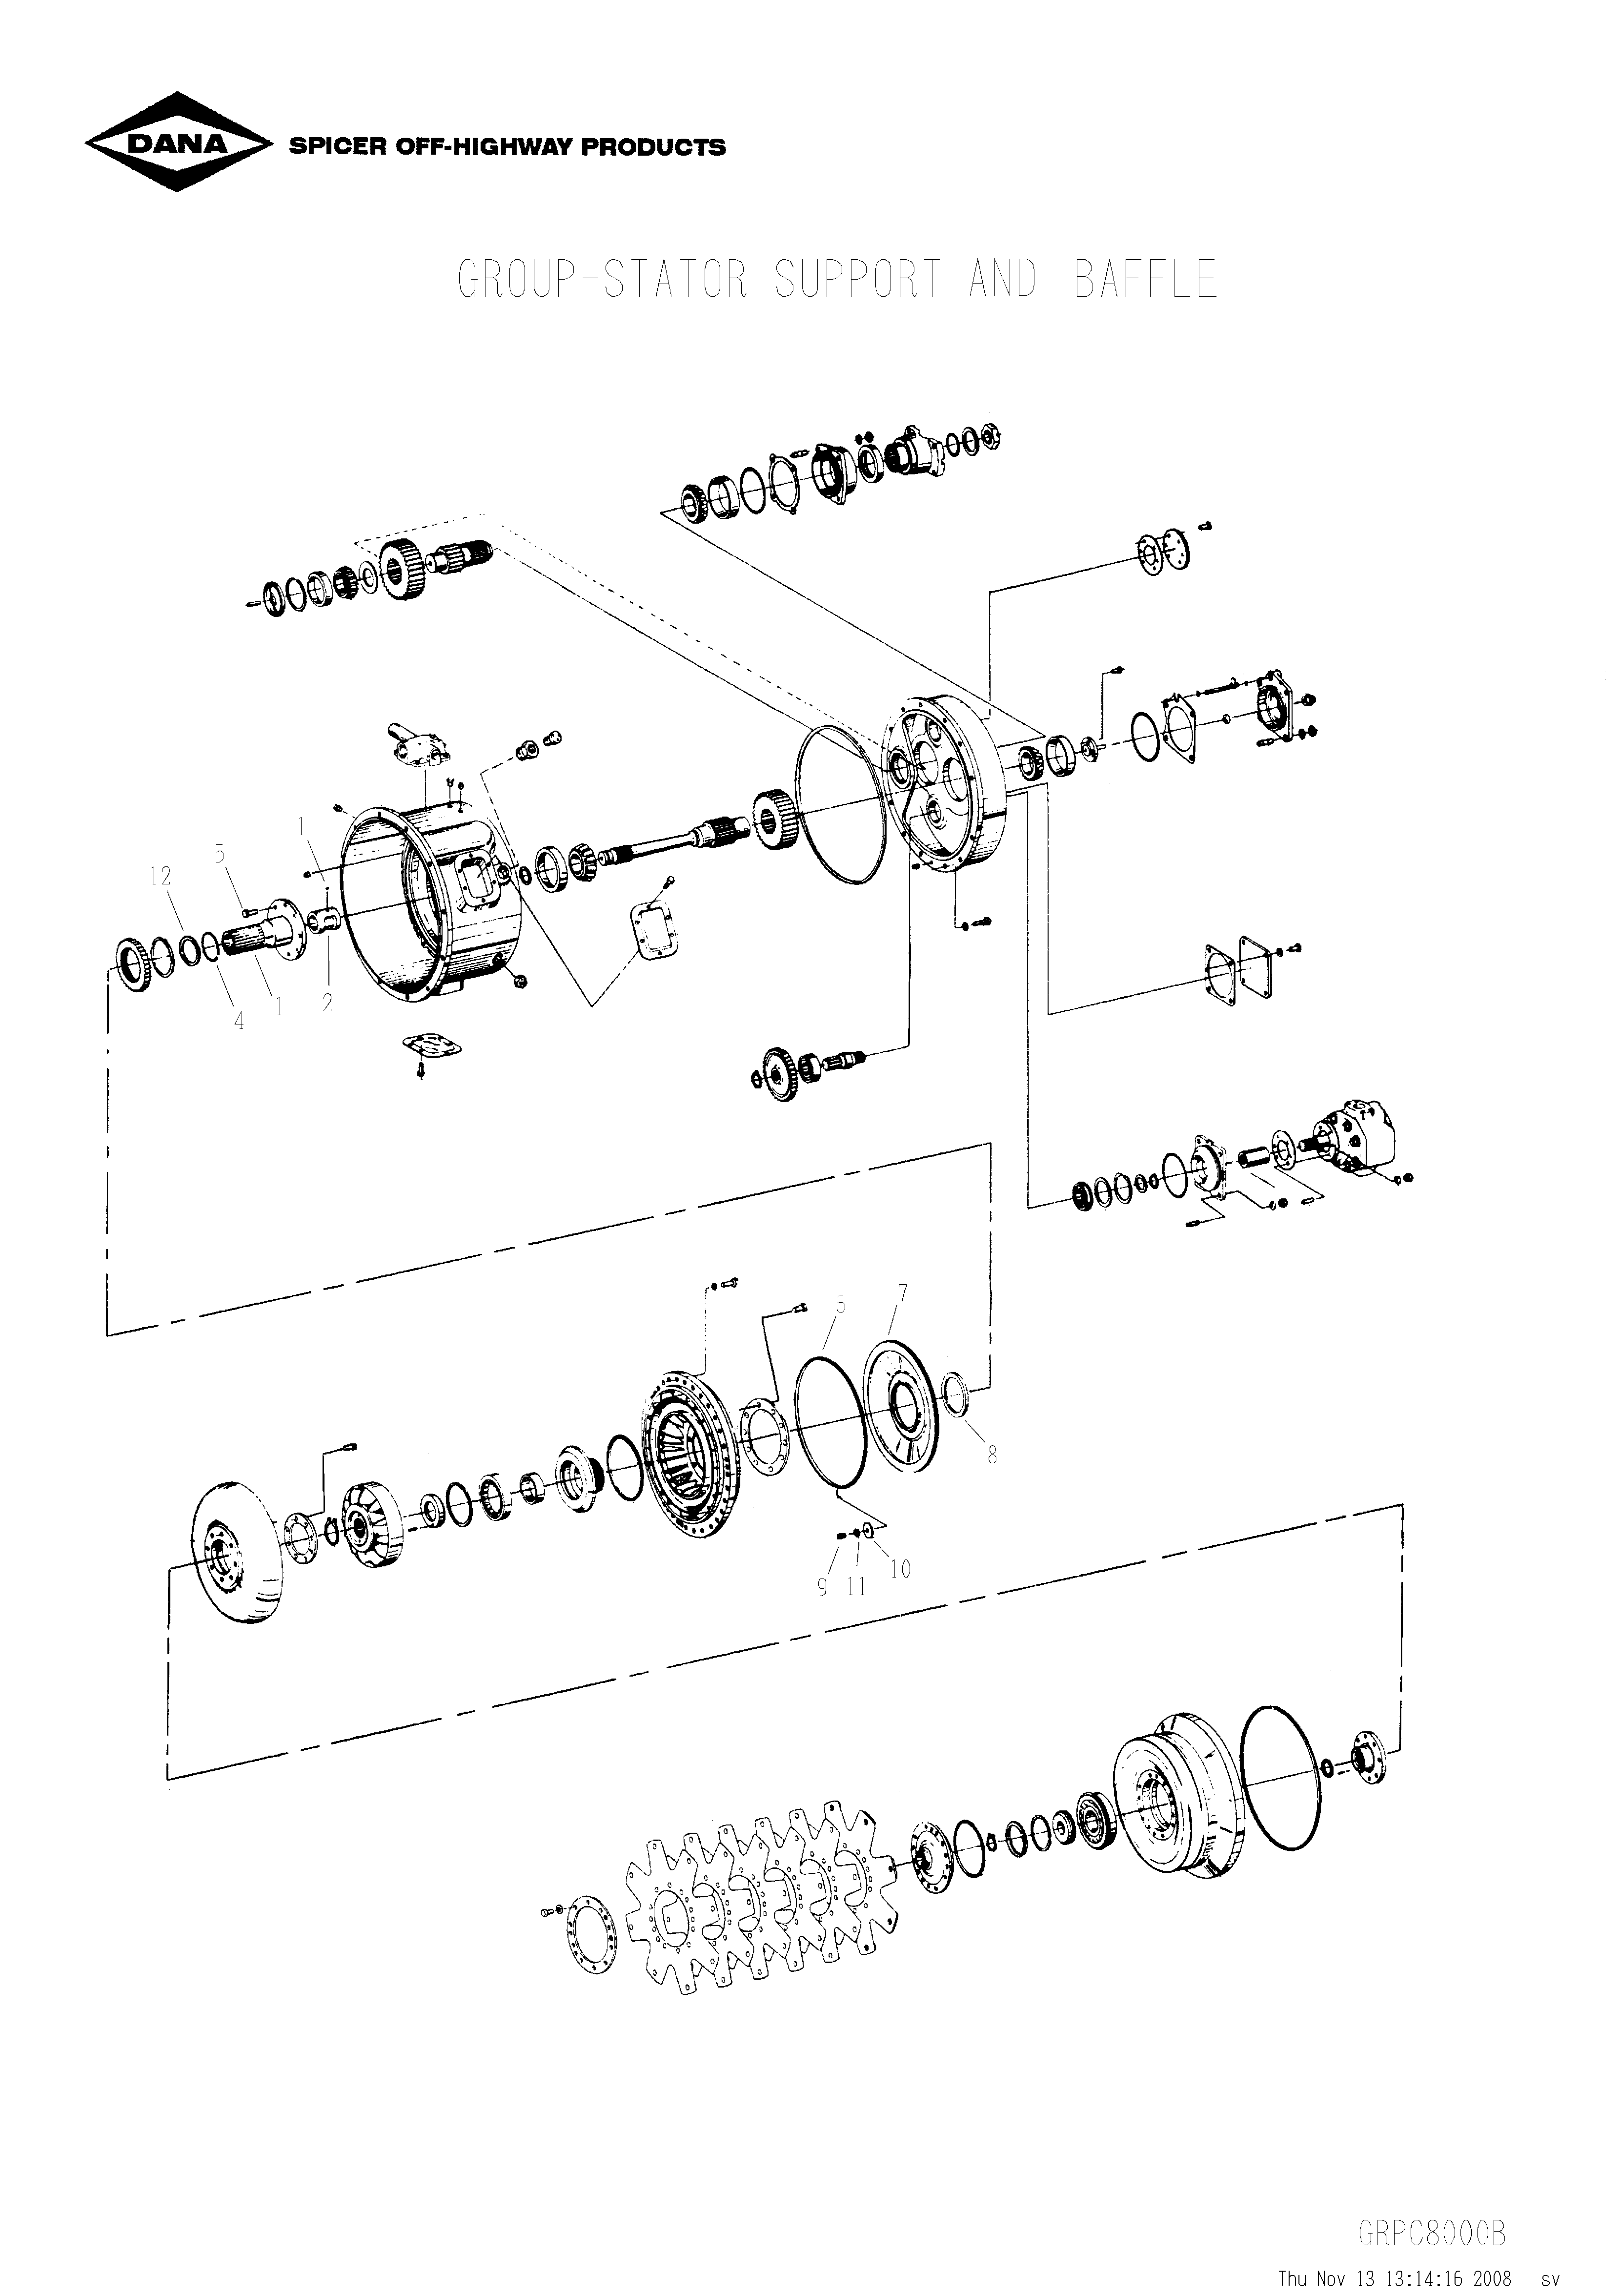 drawing for SCHOEMA, SCHOETTLER MASCHINENFABRIK K24.000247 - PISTON RING (figure 3)